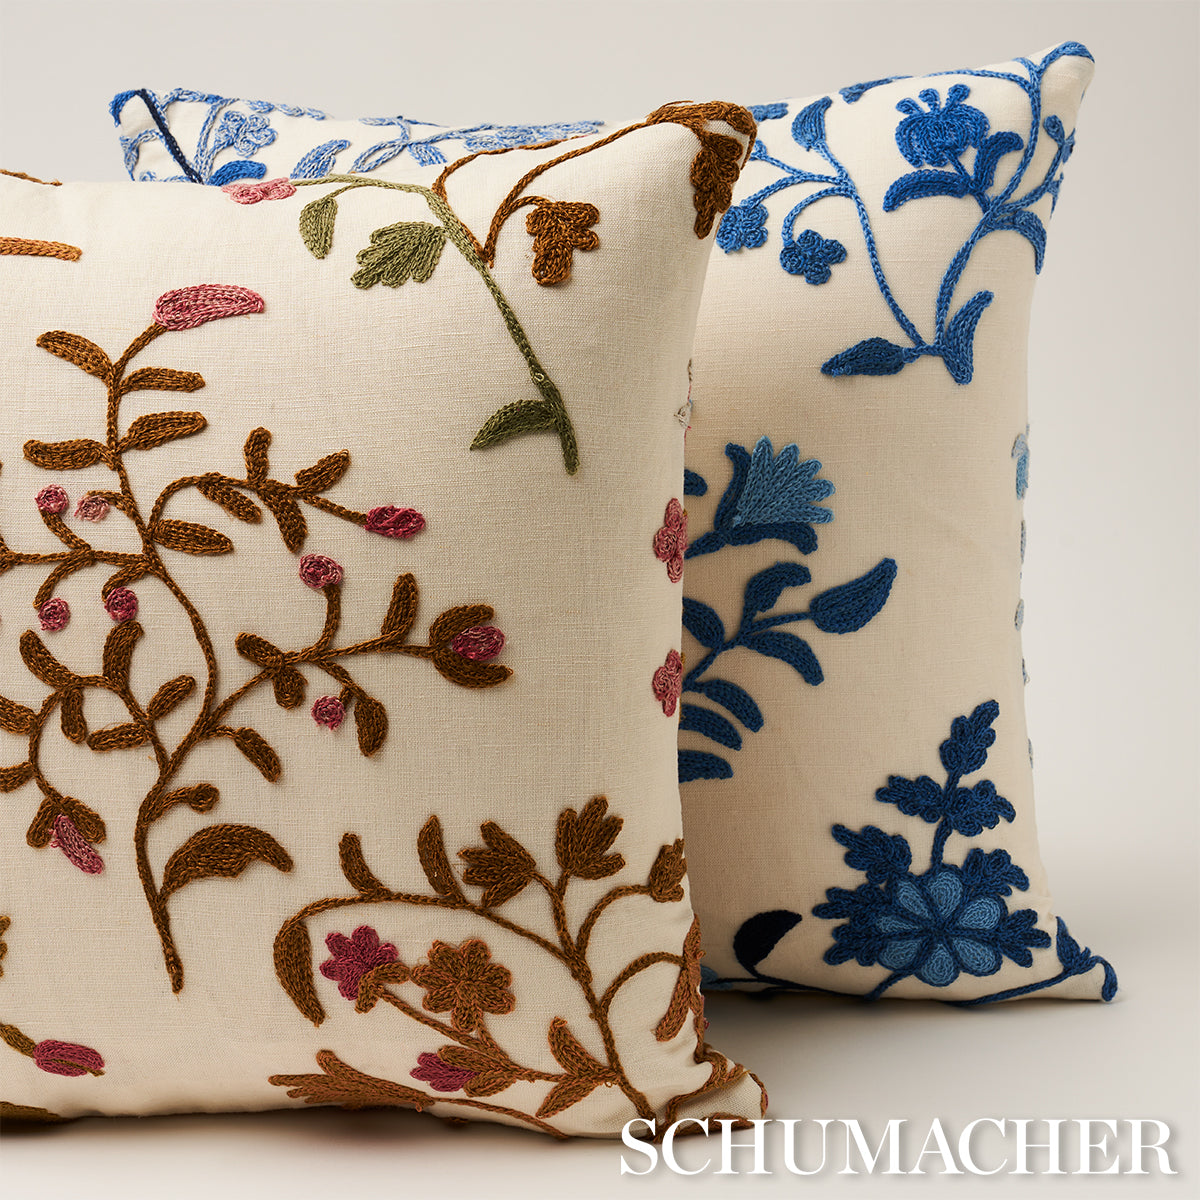 Raleigh Crewel Embroidery Pillow B | Autumn